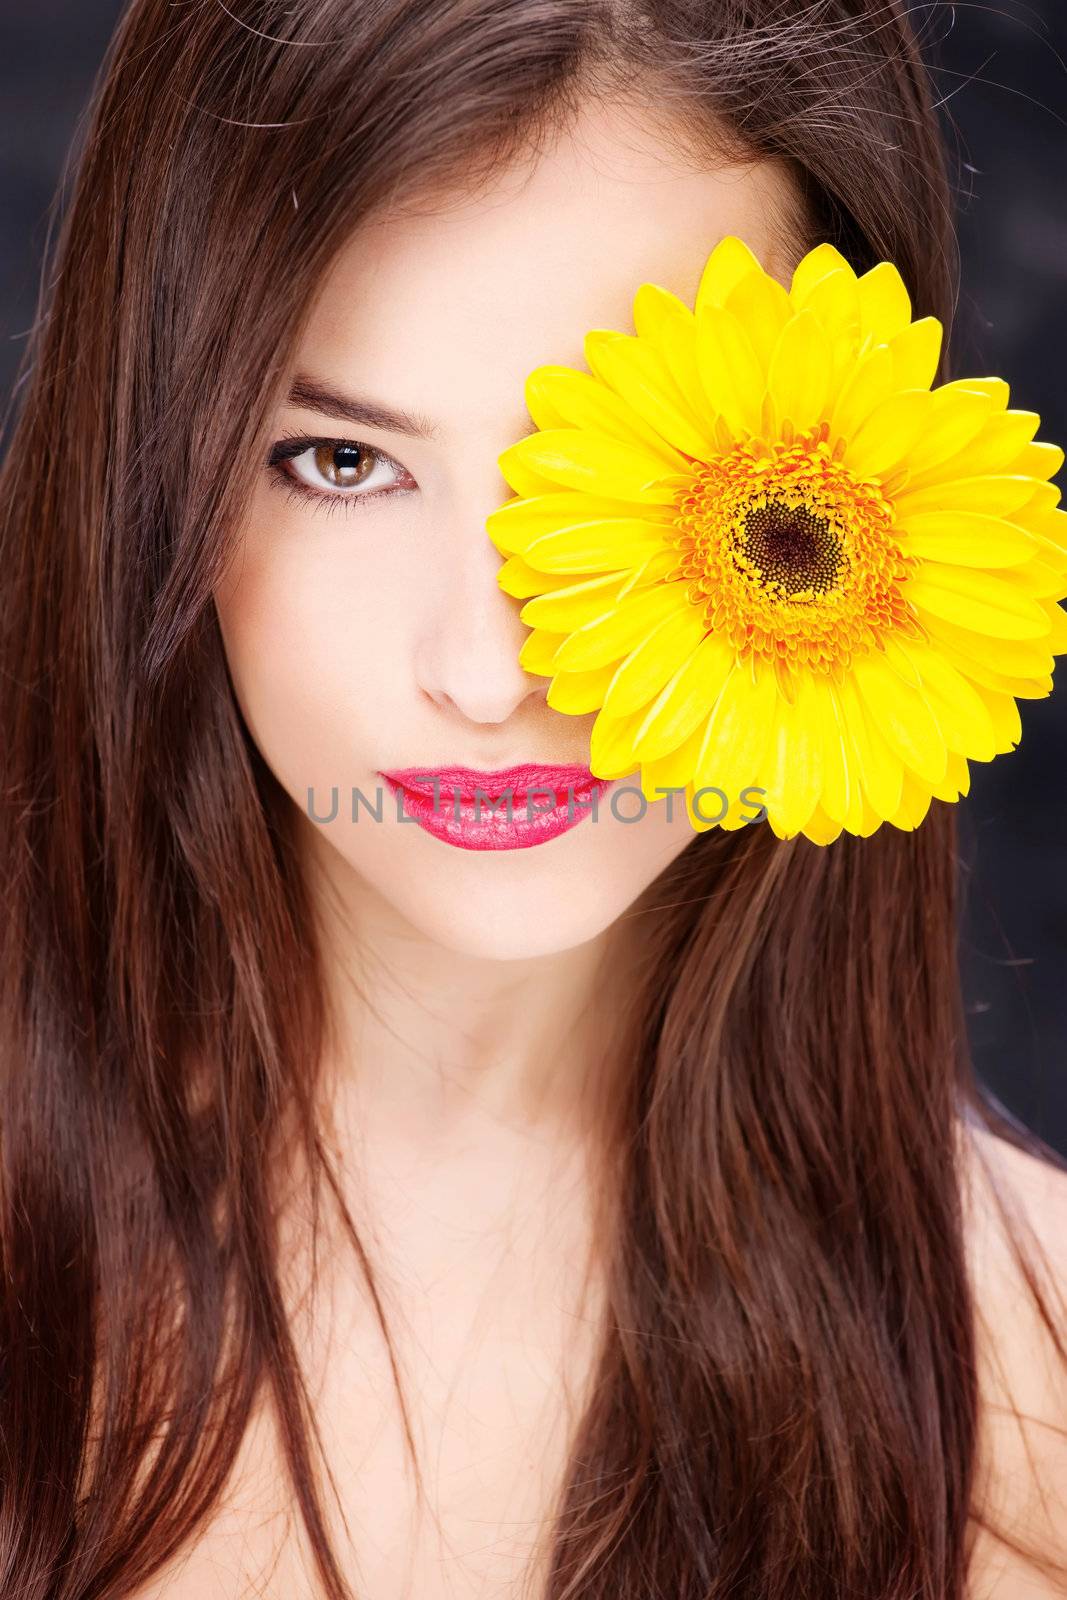 Yellow daisy over pretty woman's eye